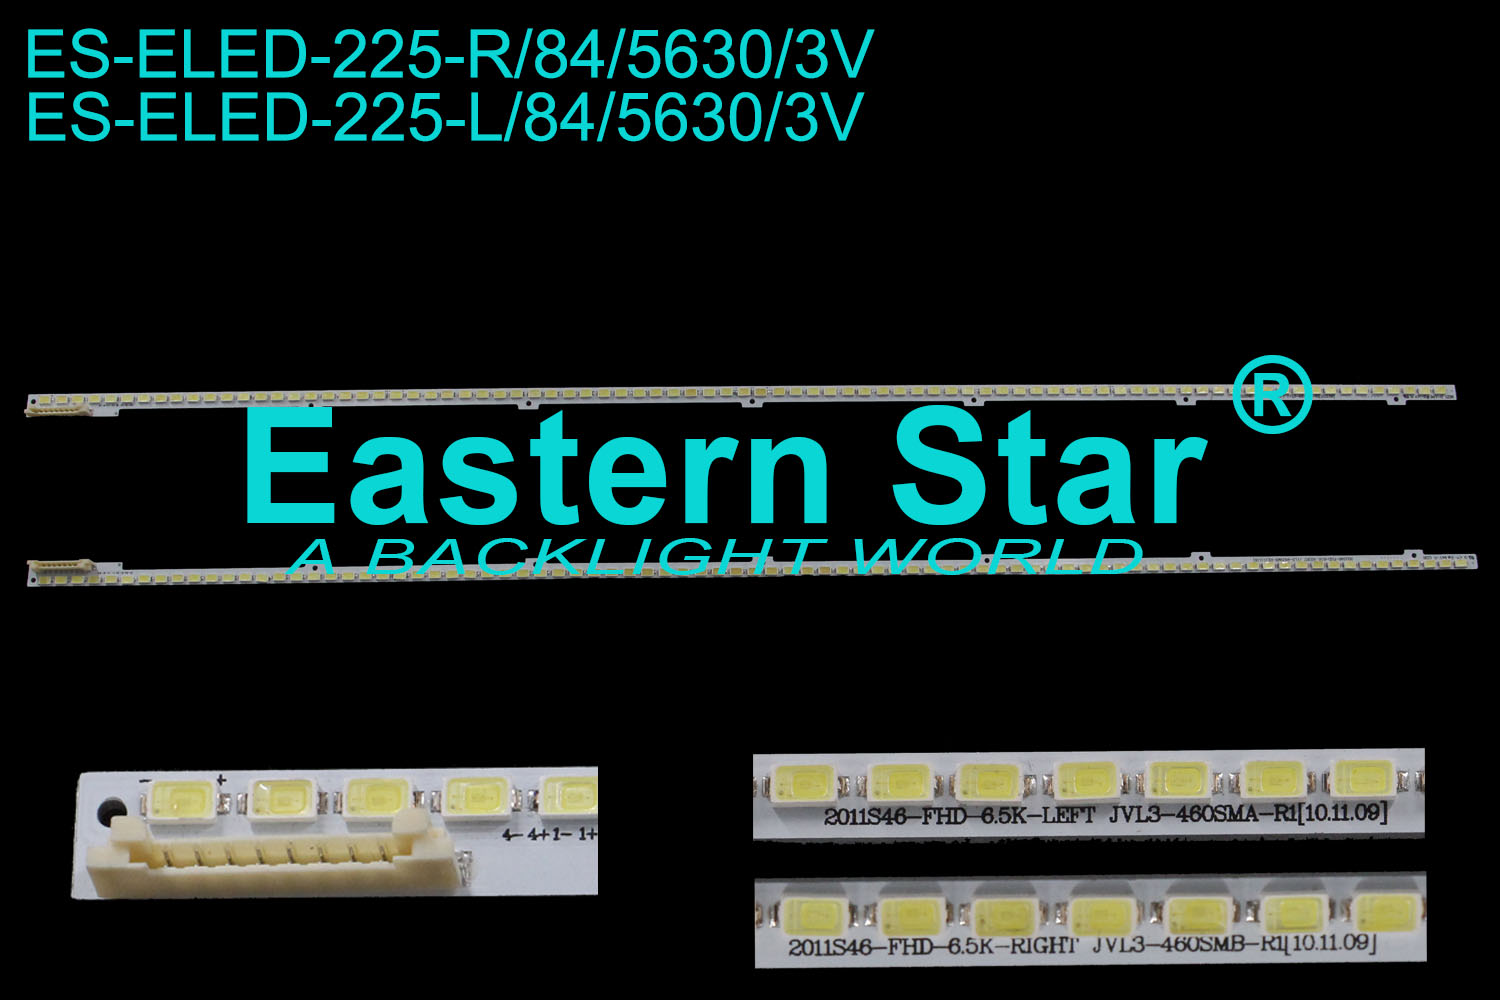 ES-ELED-225 ELED/EDGE TV backlight 46'' use for Samsung 84LEDs 2011S46-FHD-6.5K-LEFT/RIGHT JVL3-460SMB-R1(10.11.09) LED STRIPS(4)